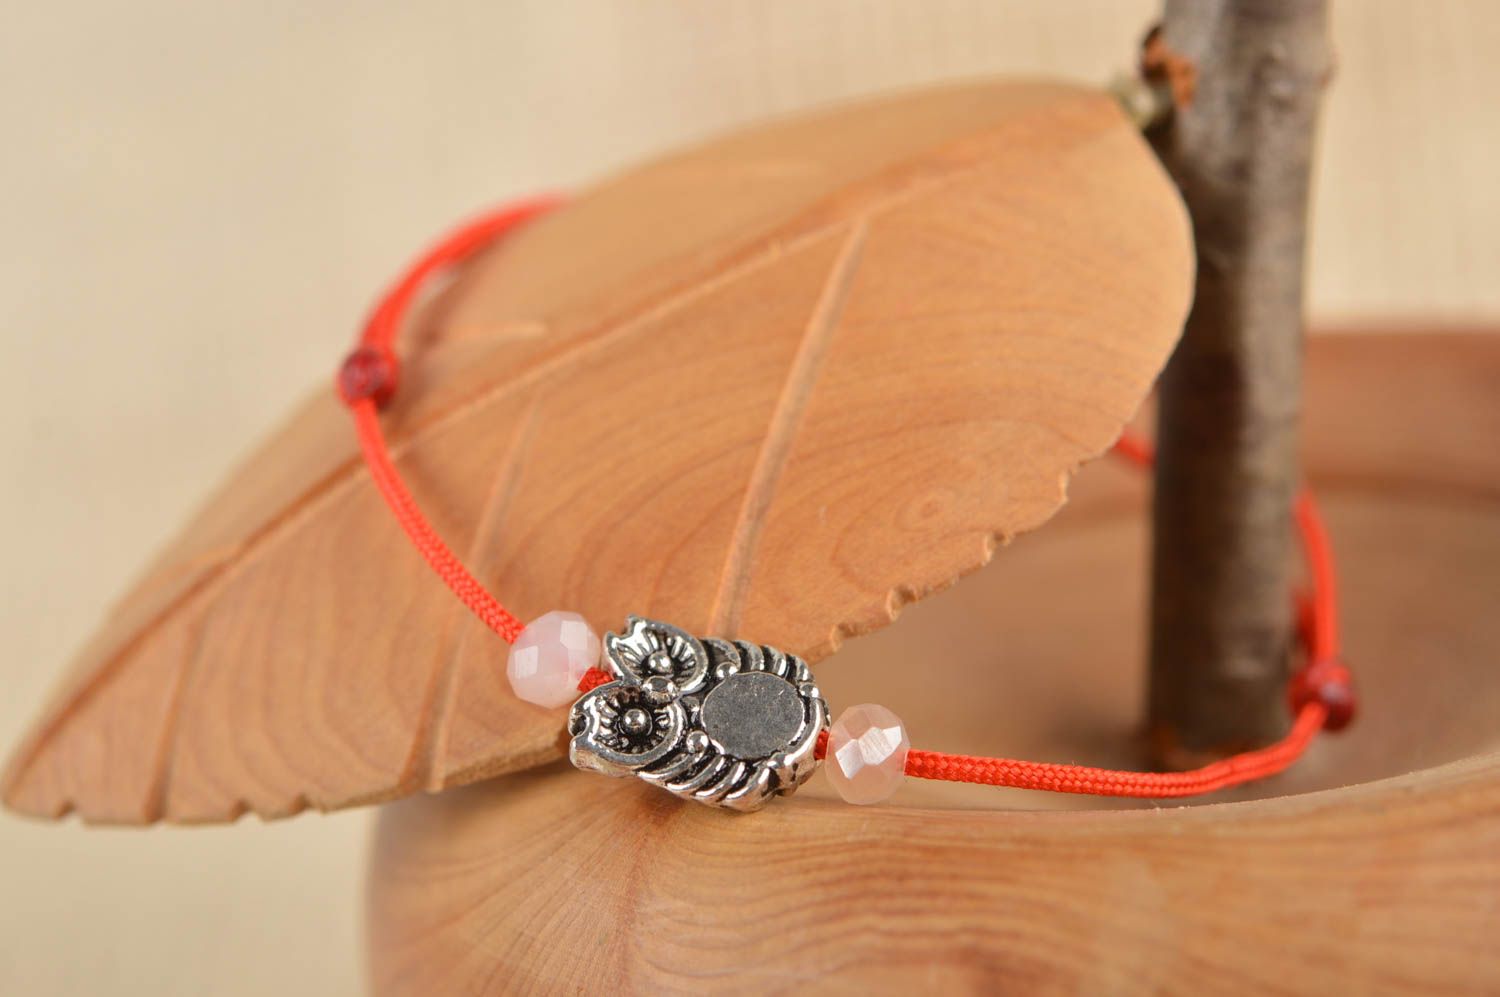 Stylish handmade thread bracelet fashion tips casual jewelry designs gift ideas photo 1